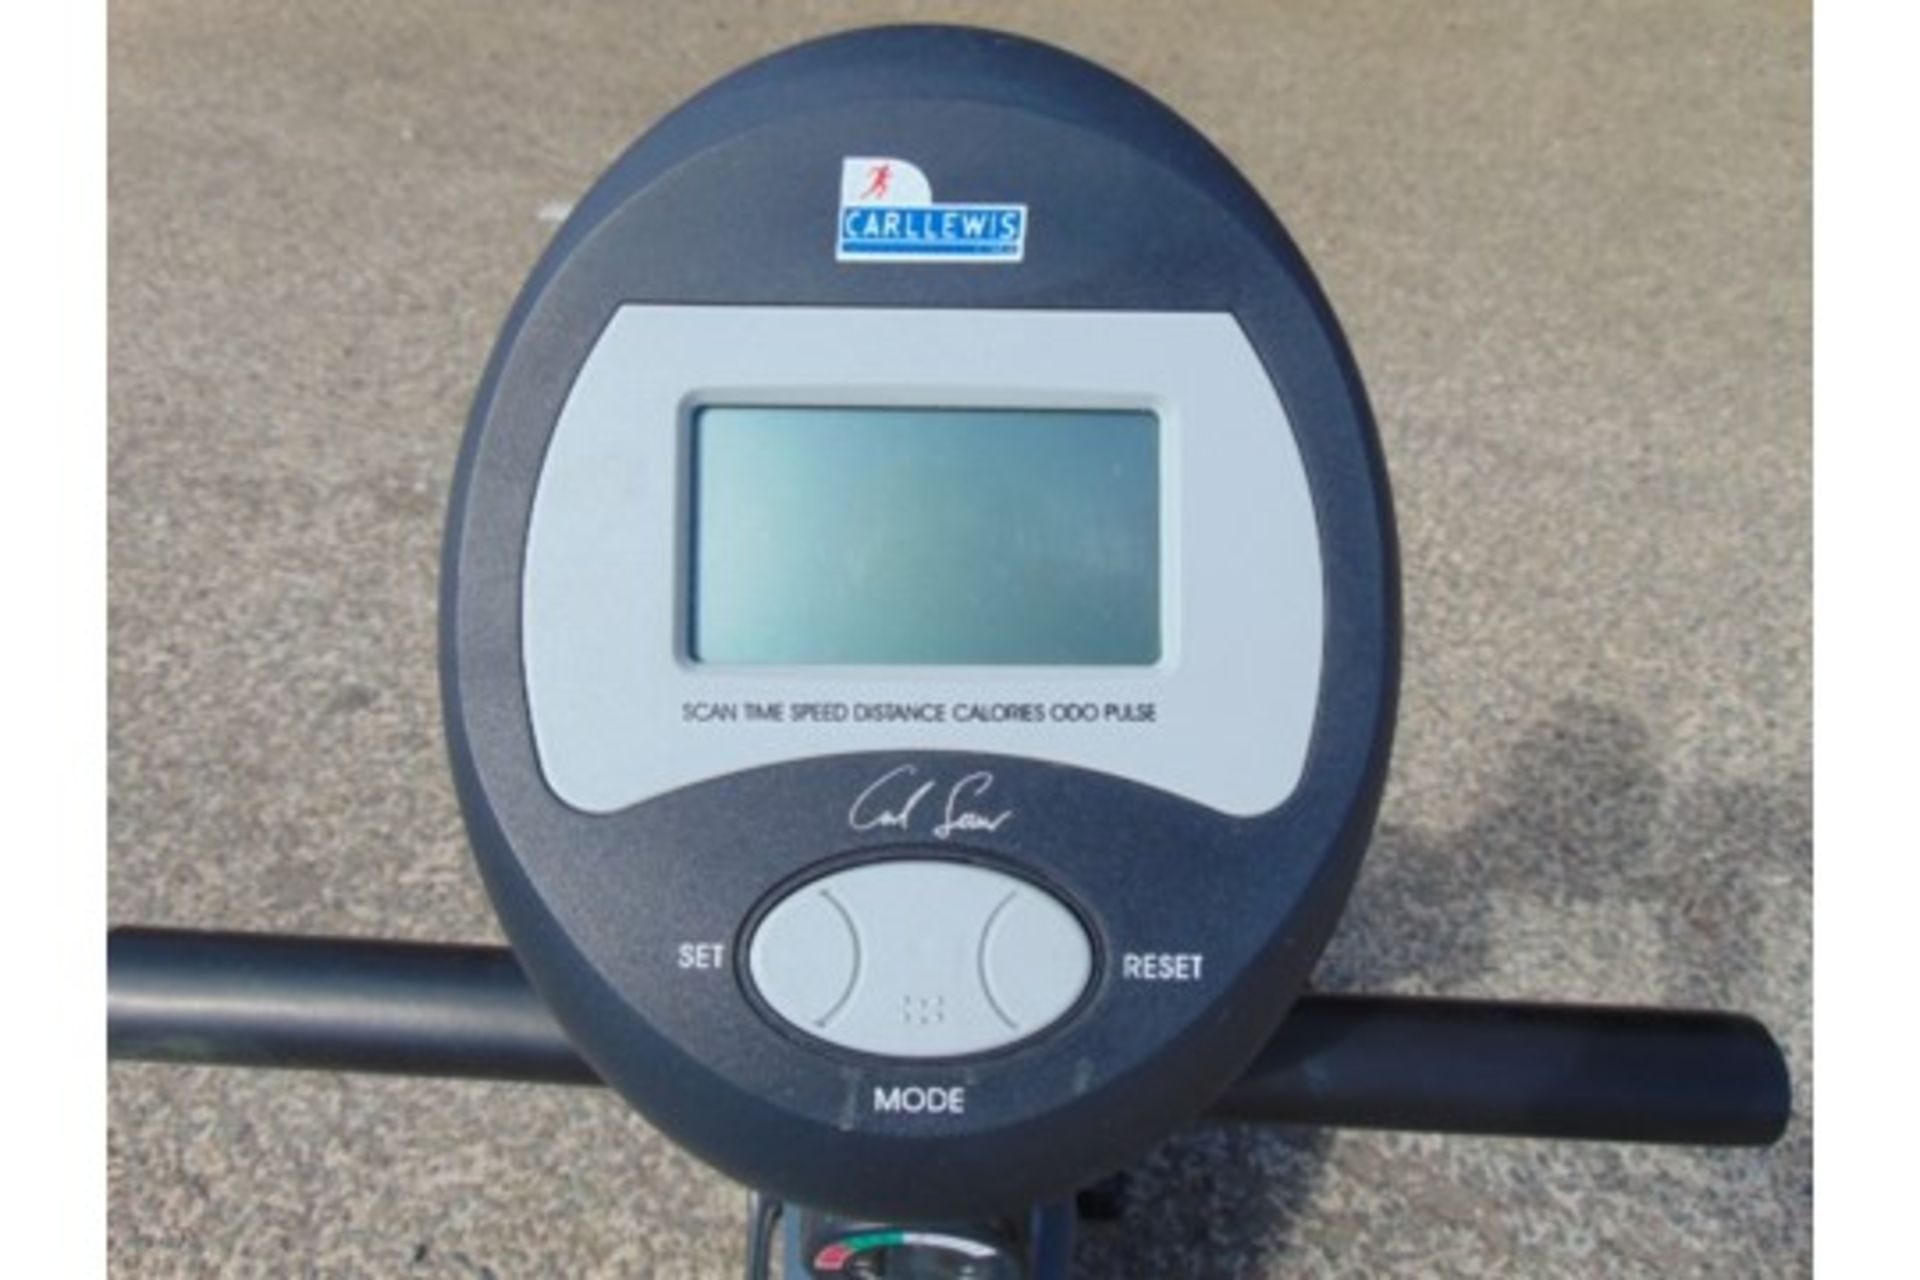 Carl Lewis EMR17 Magnetic Recumbent Exercise Bike - Image 7 of 9